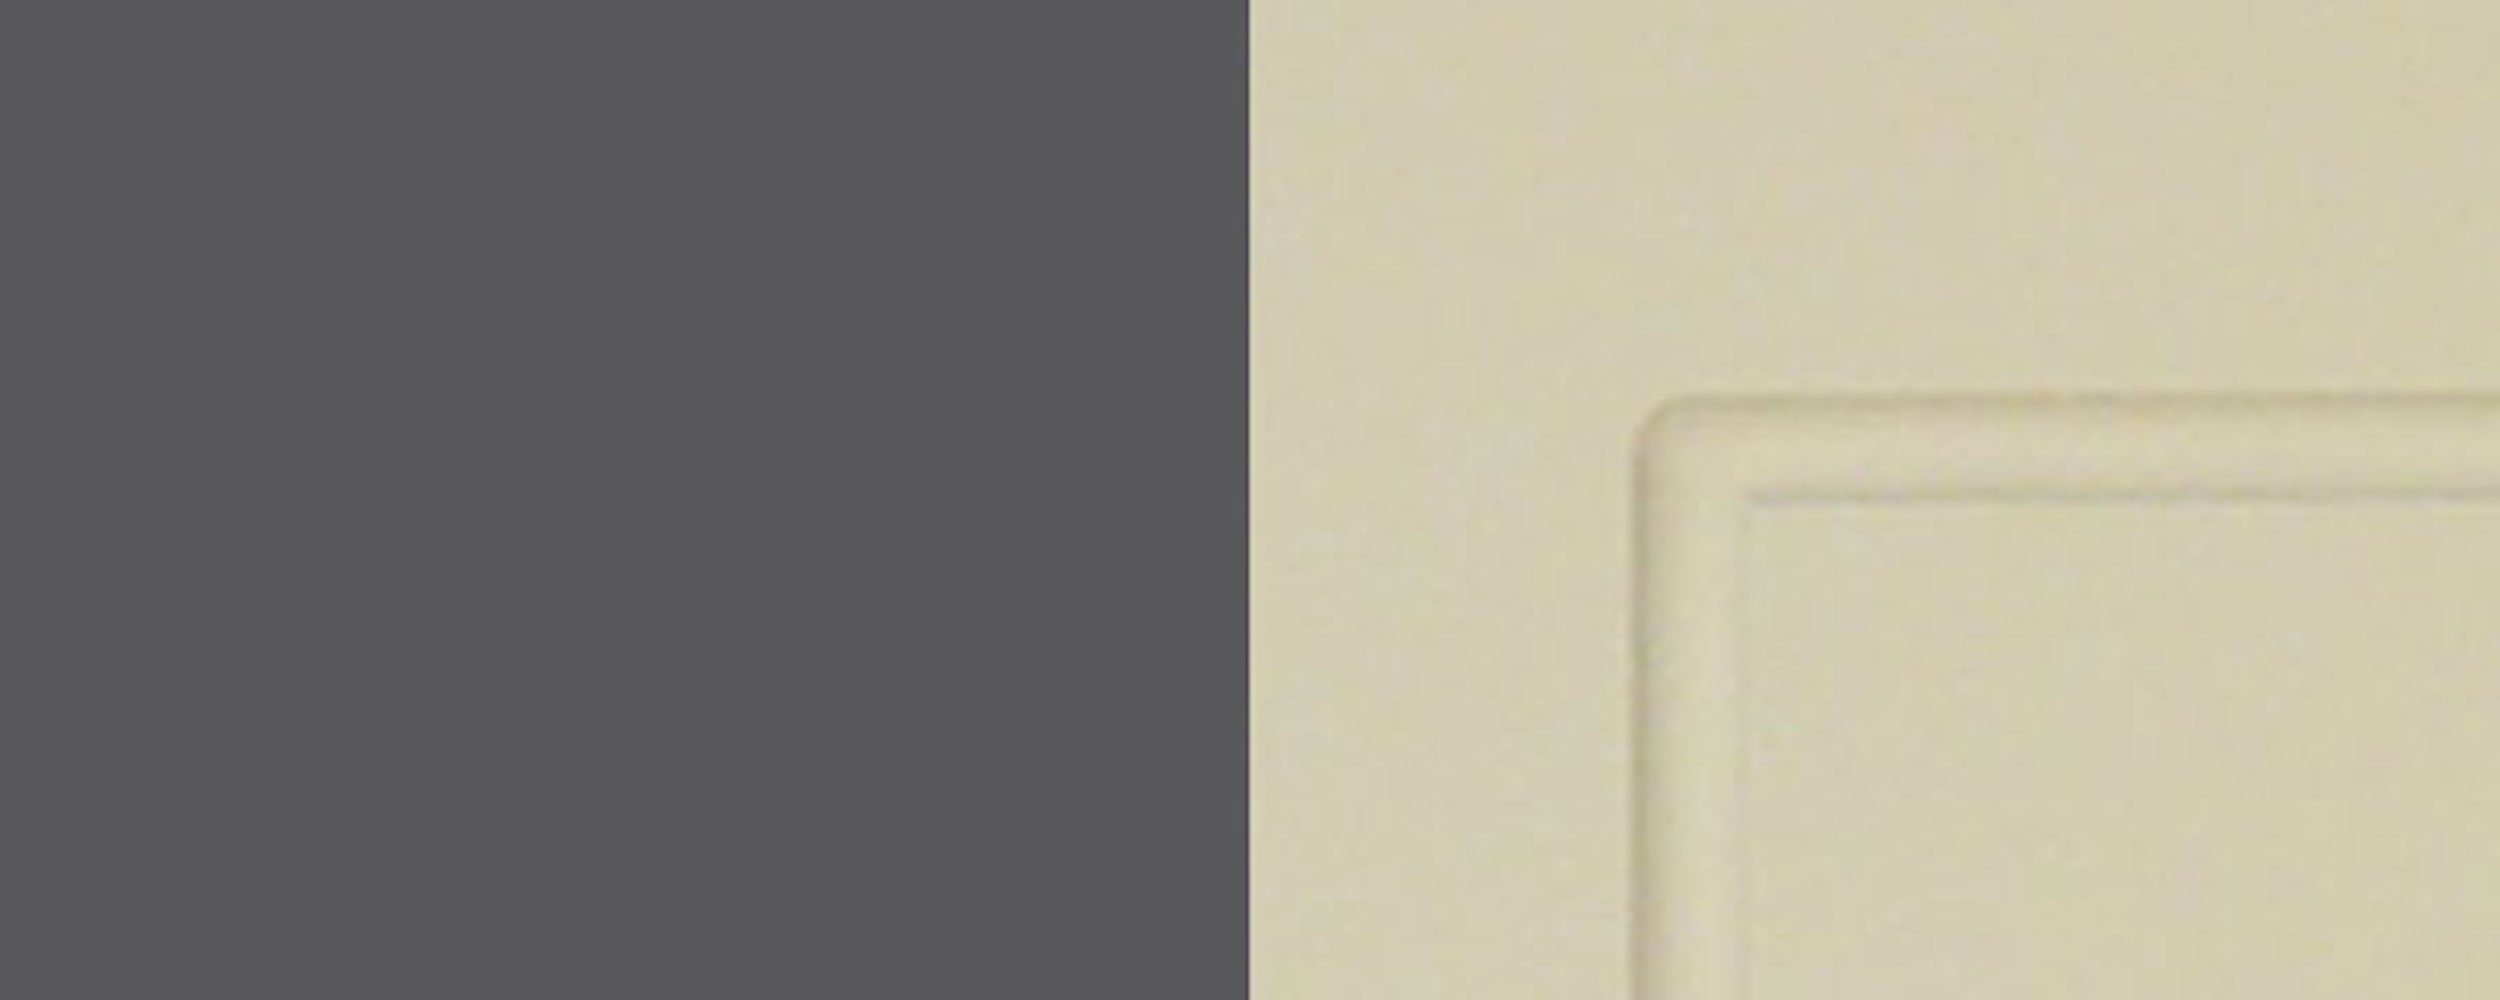 60cm Feldmann-Wohnen Faltlifthängeschrank Kvantum vanille matt Korpusfarbe Hochfaltklappe wählbar 2-teilige (Kvantum) & Front-